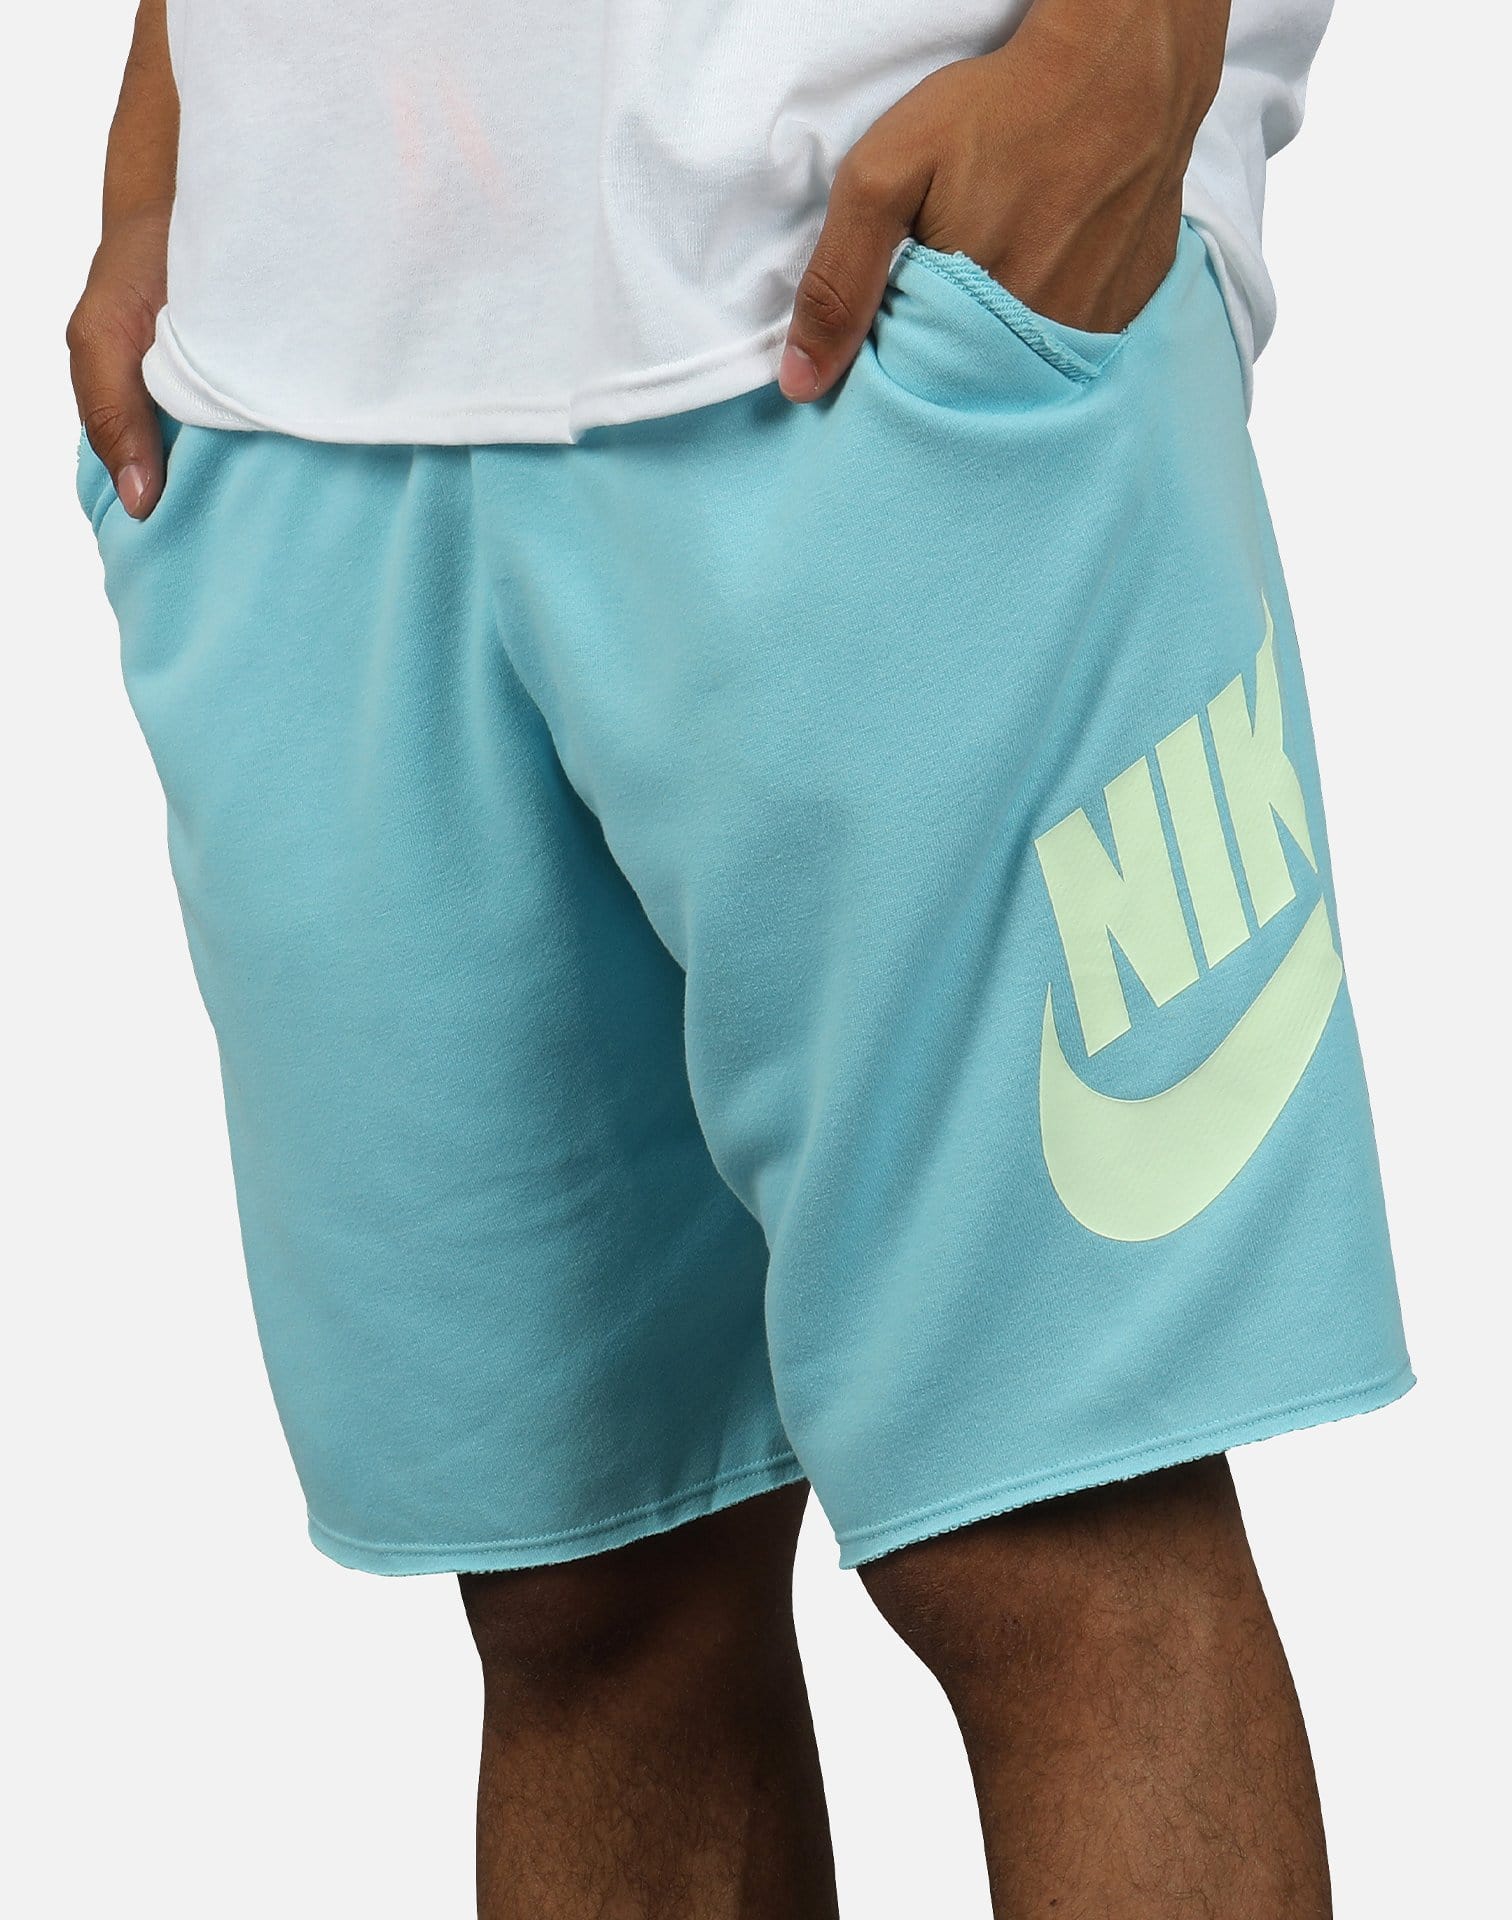 blue nike alumni shorts